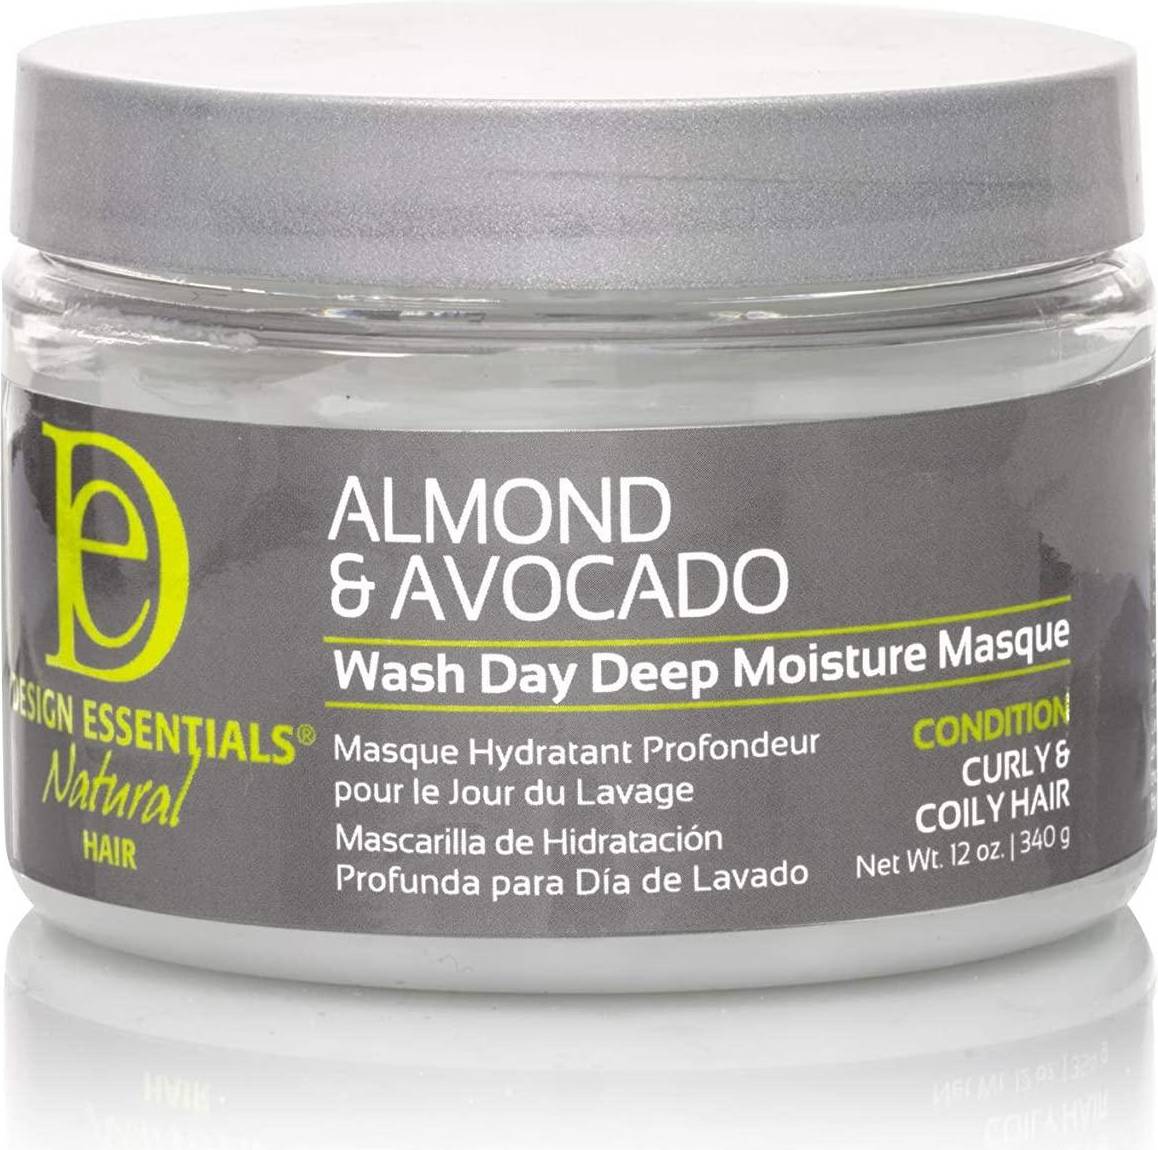 Design Essentials Wash Day Deep Moisture Masque Almond And Avocado 340g • Pris 7051